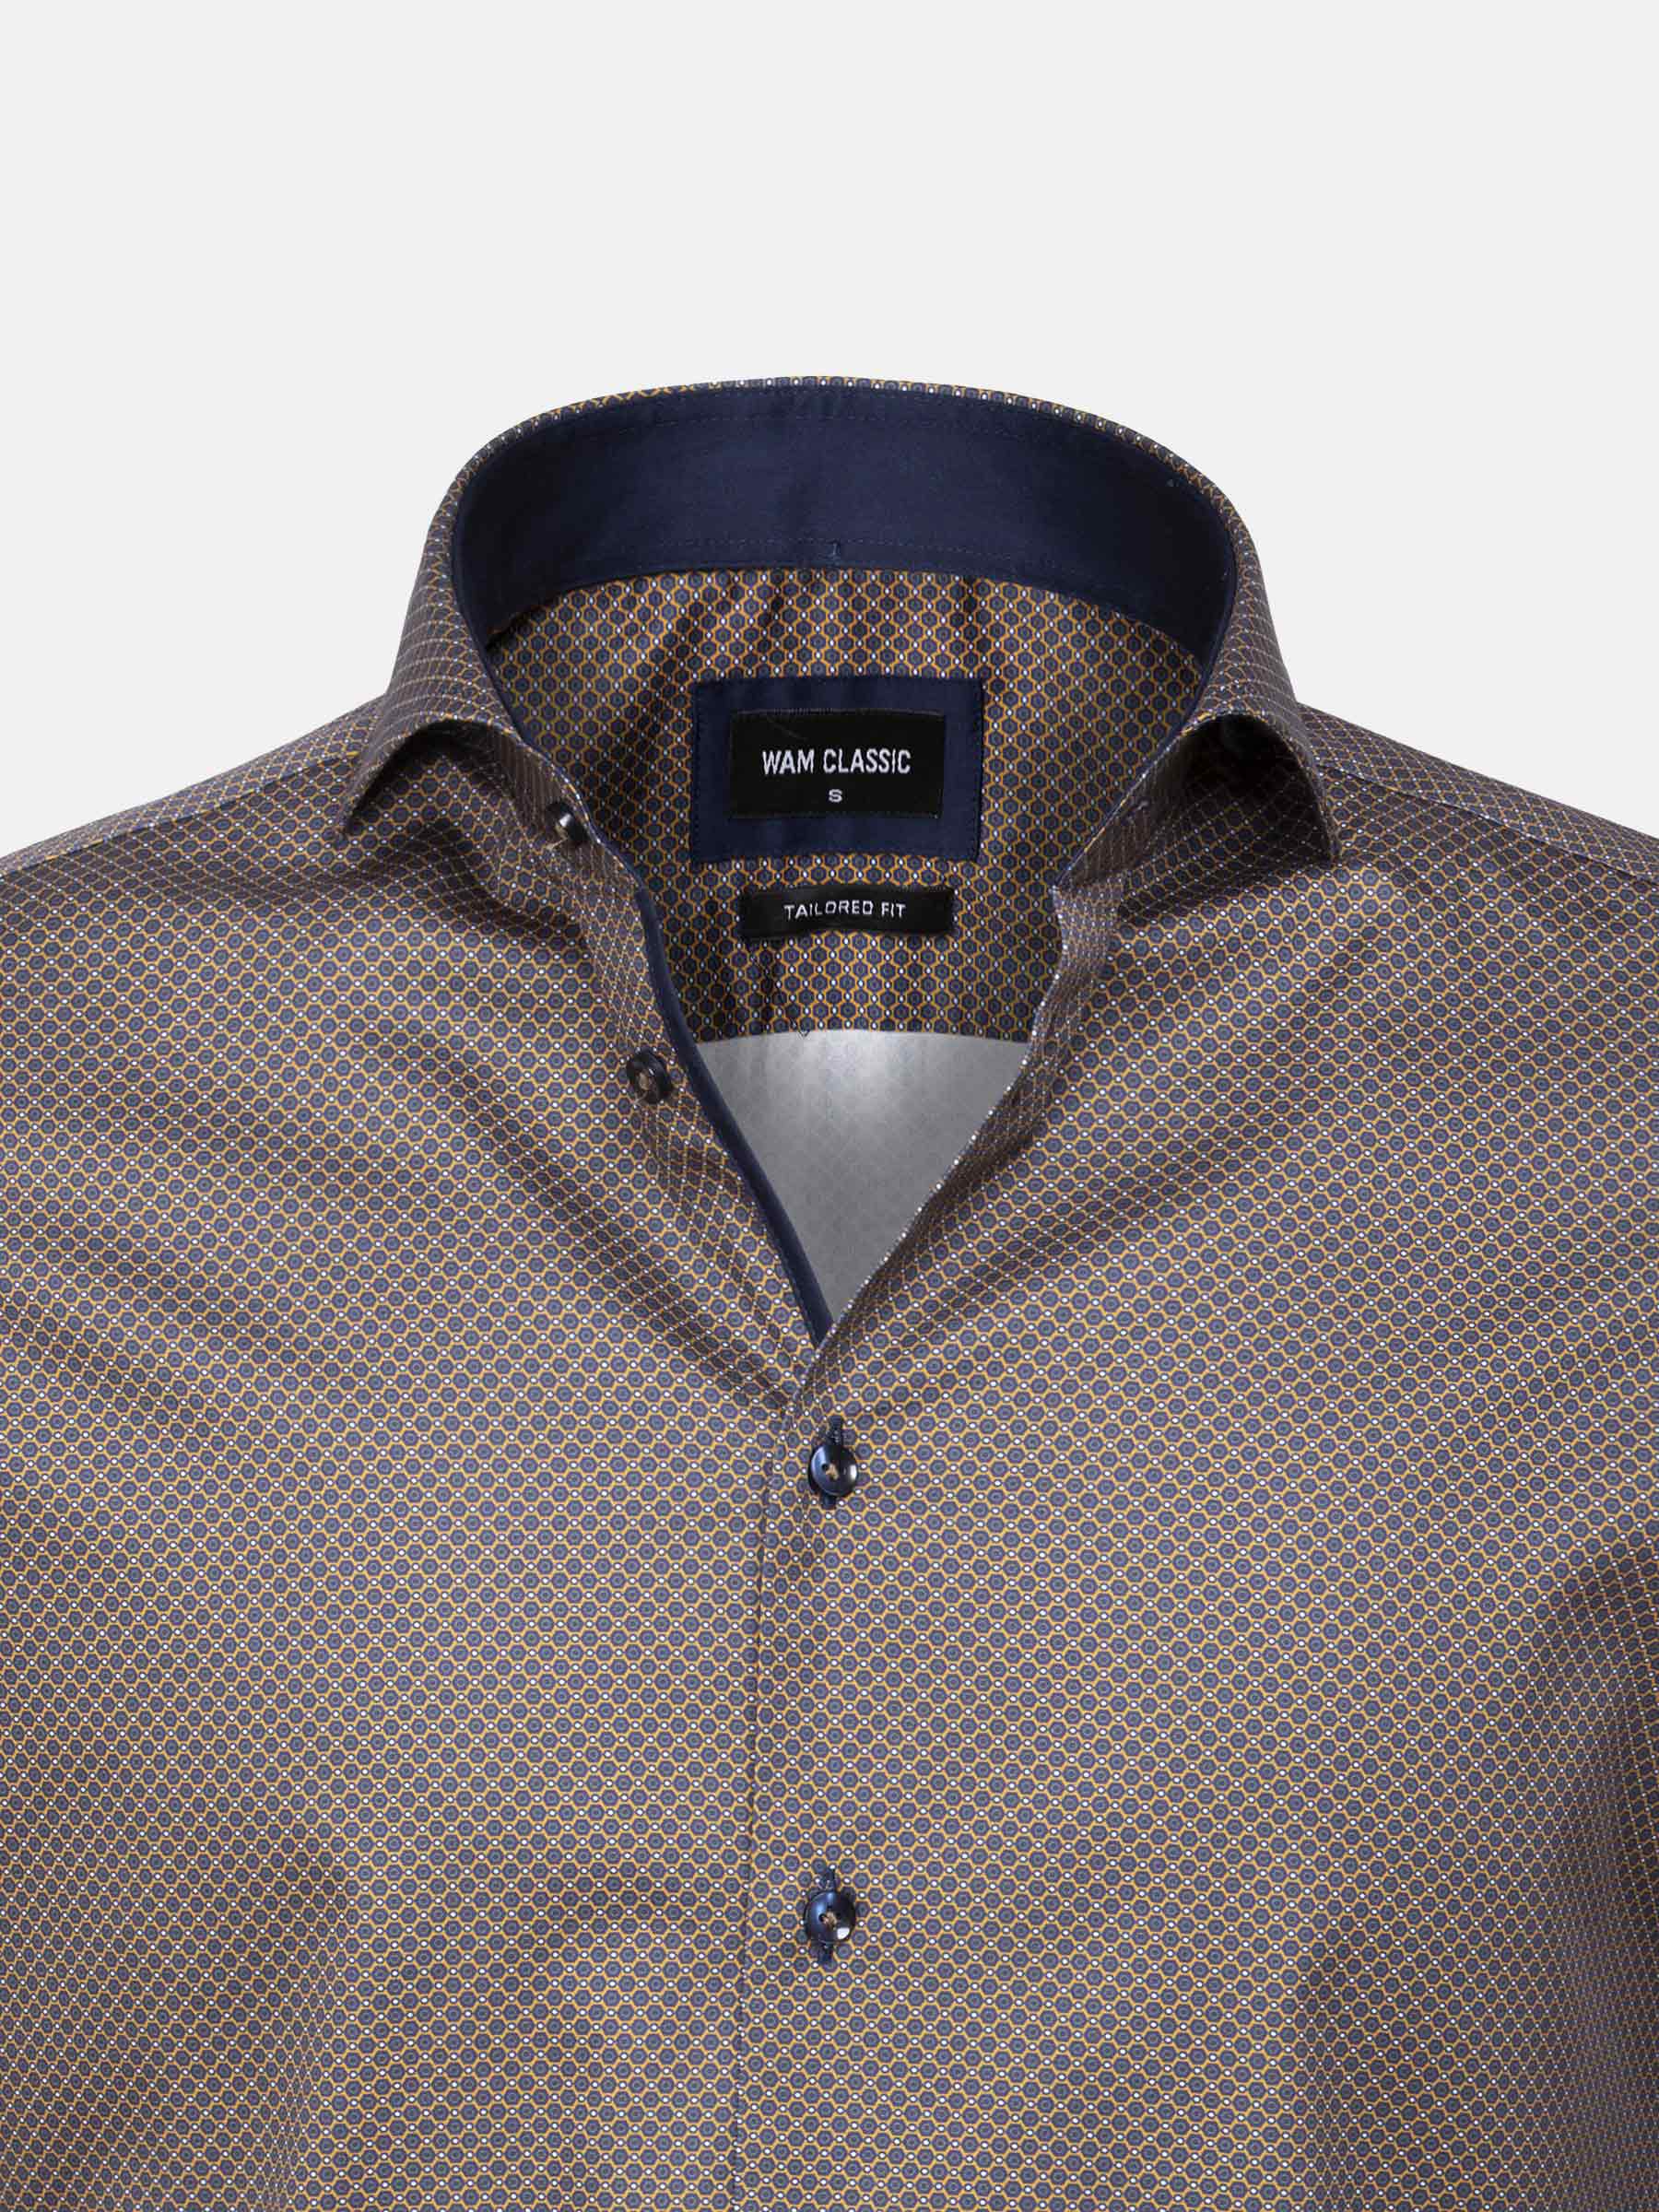 Shirt Long Sleeve 75608 Badalona Brown